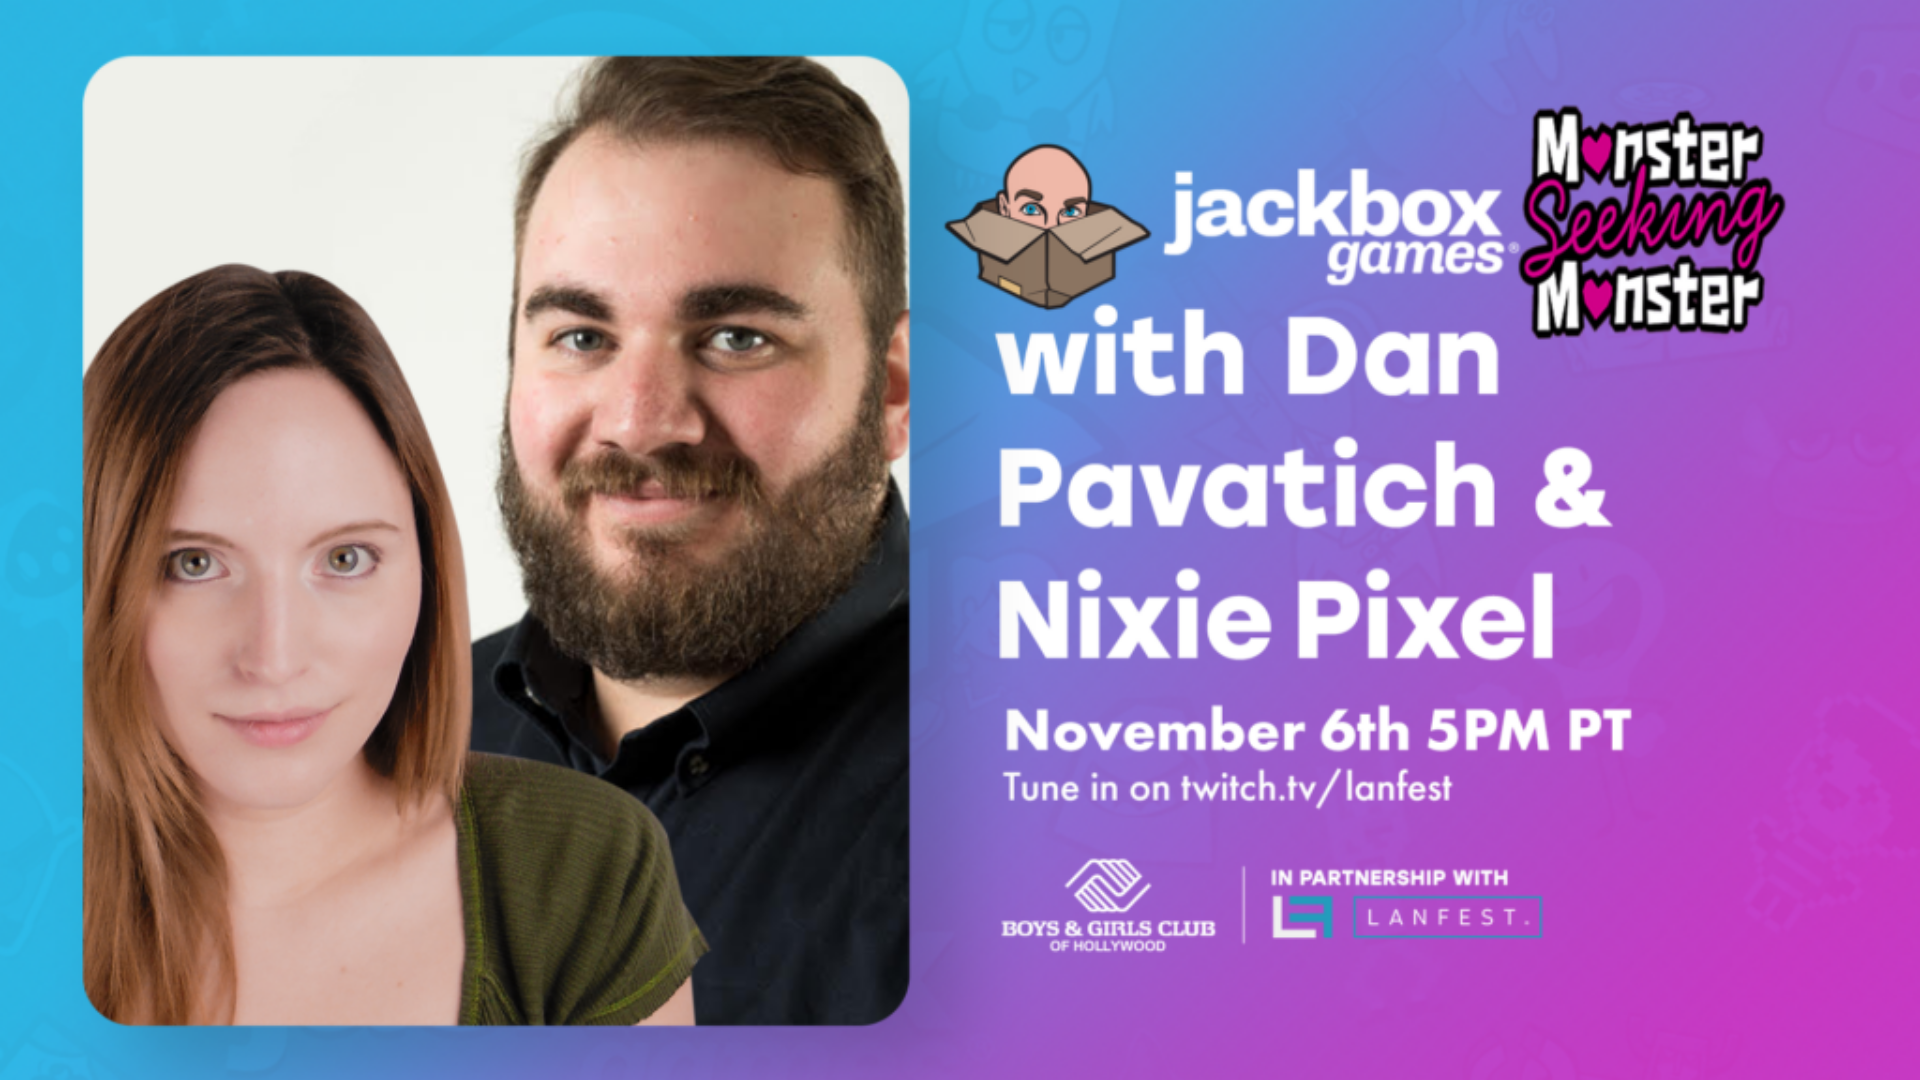 Dan_pavatich_and_Nixie_Pixel_16x9